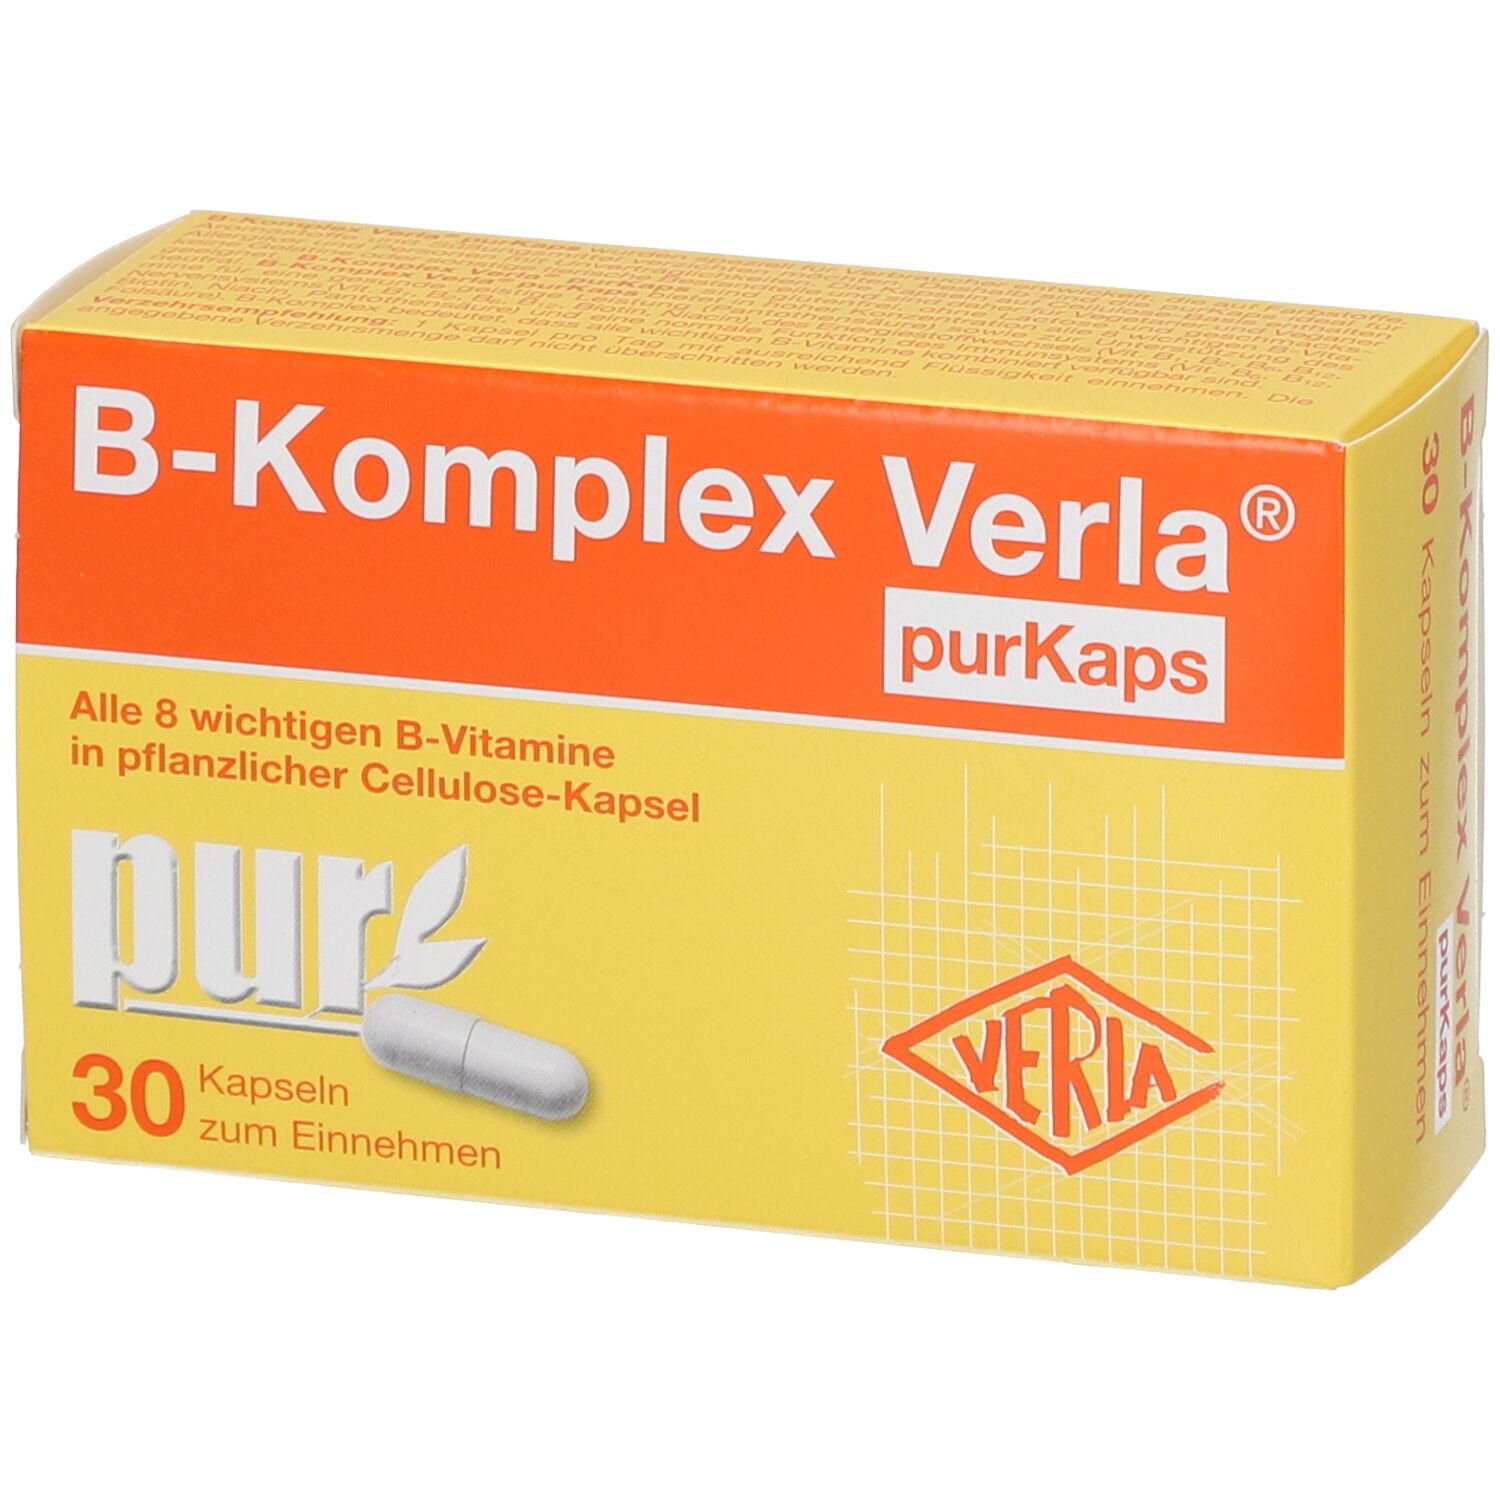 B-Komplex Verla® purKaps